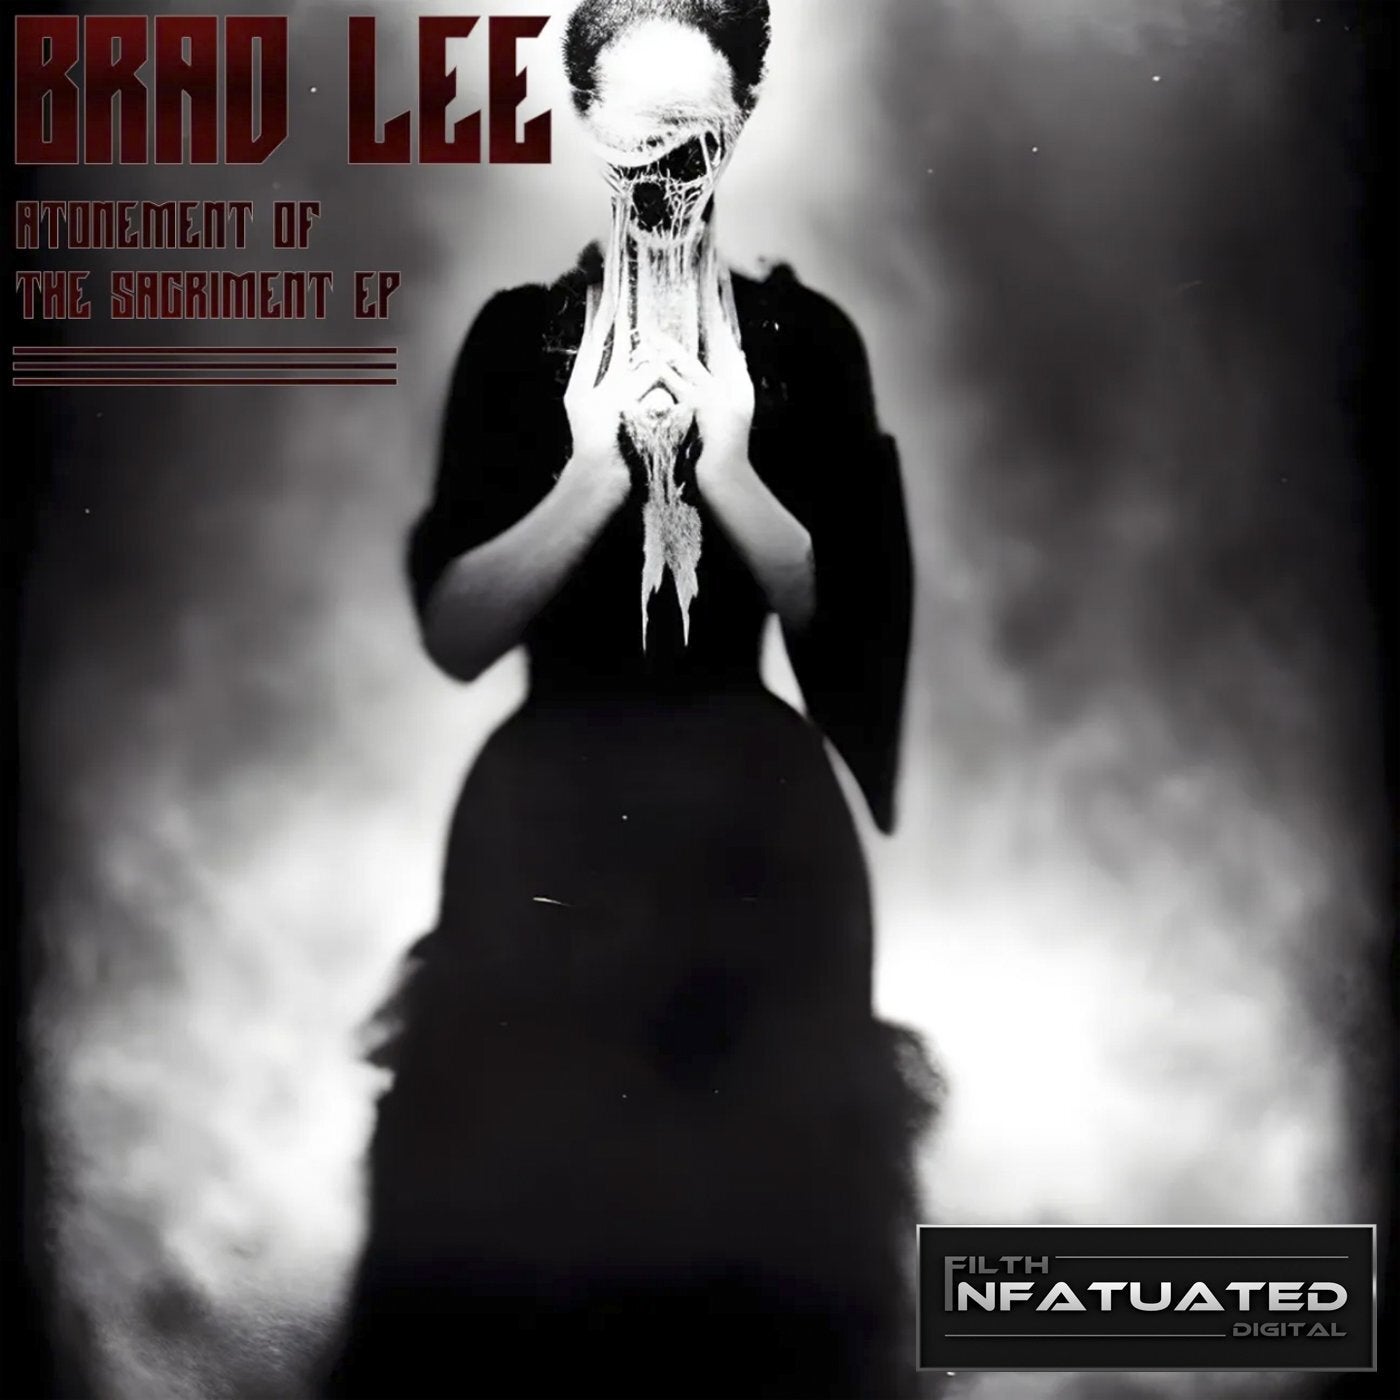 Brad Lee music download - Beatport